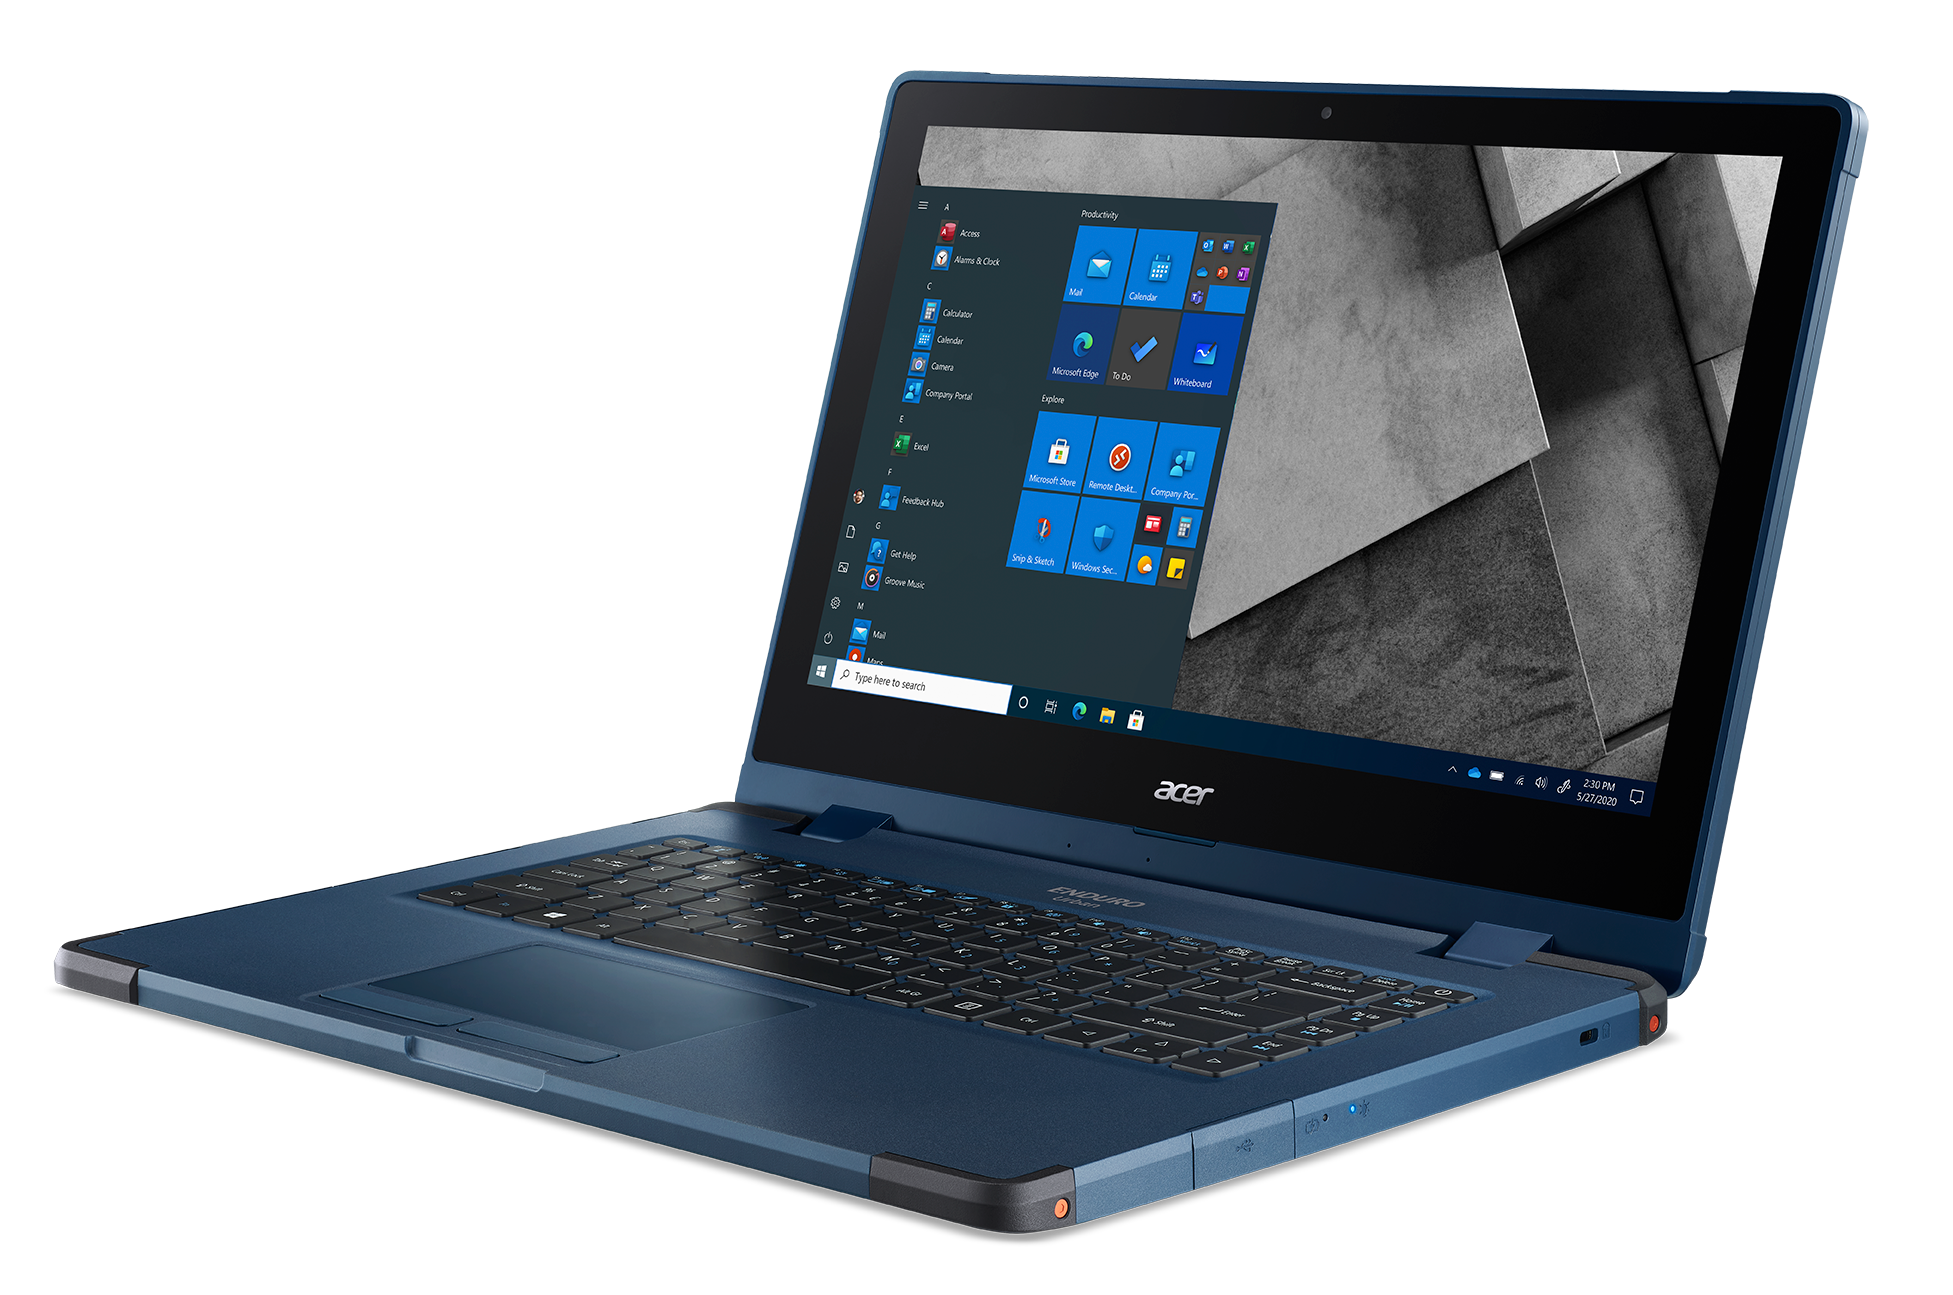 Acer Enduro Urban N3, 14" Full HD IPS, 11th Gen Intel Core i7-1165G7, 16GB DDR4, 1TB NVMe SSD, Denim Blue, Windows 10 Home, EUN314-51W-789F - image 4 of 8